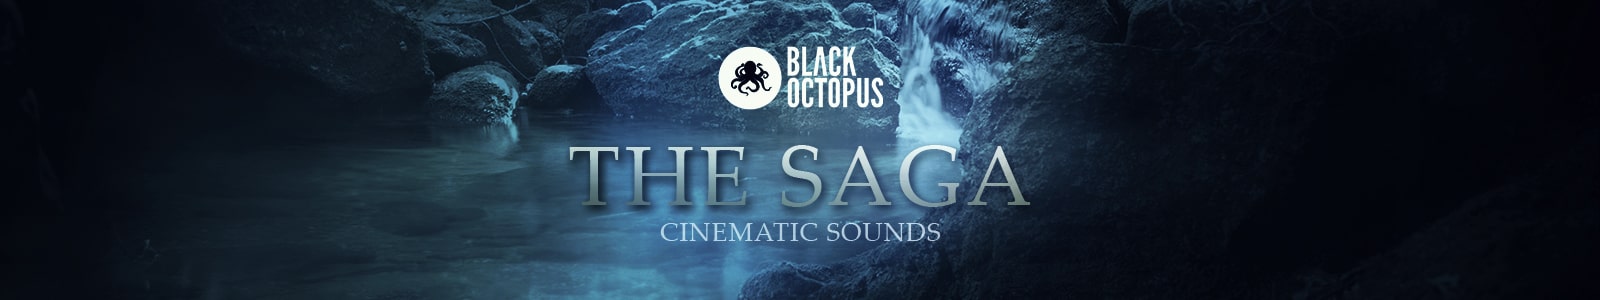 the saga by black octopus